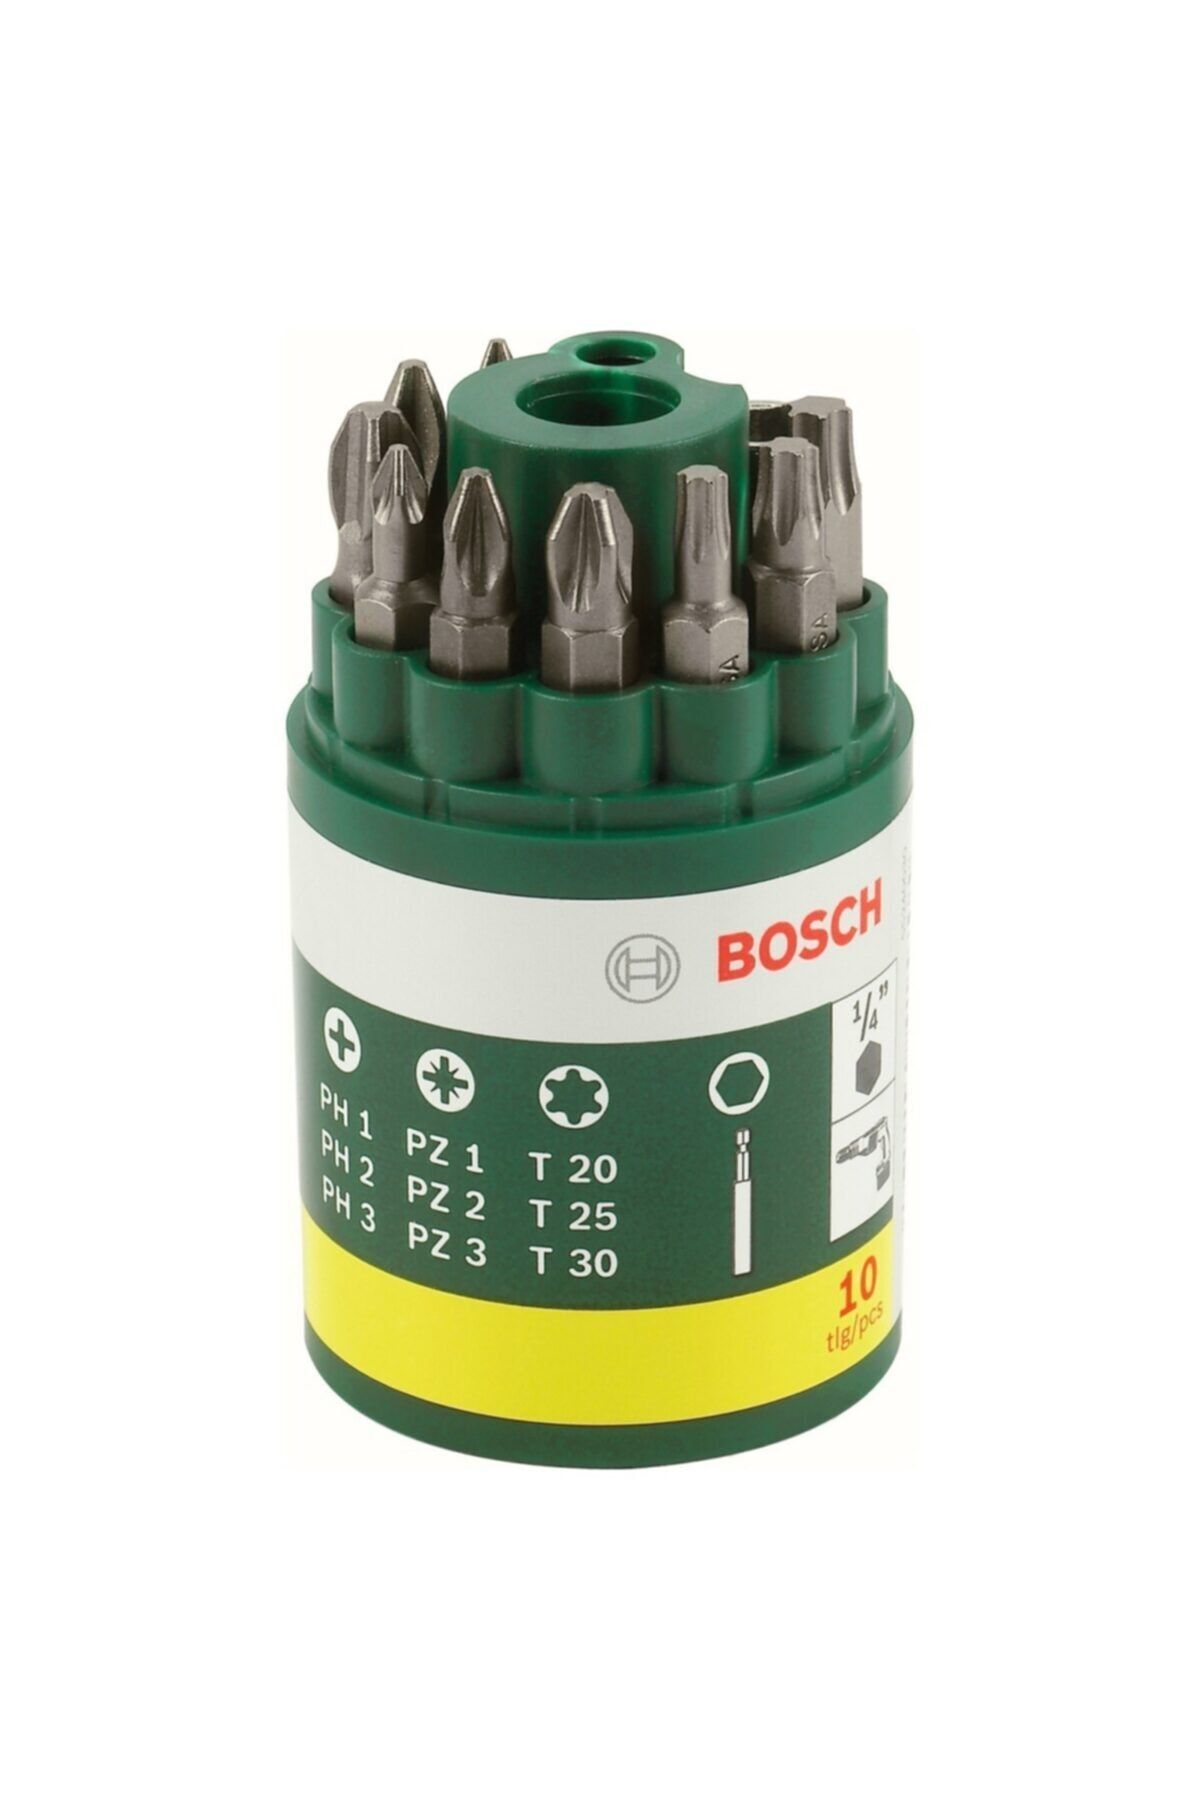 Bosch Dıy 10 Parçalı Vidalama Ucu Seti - 2607019452